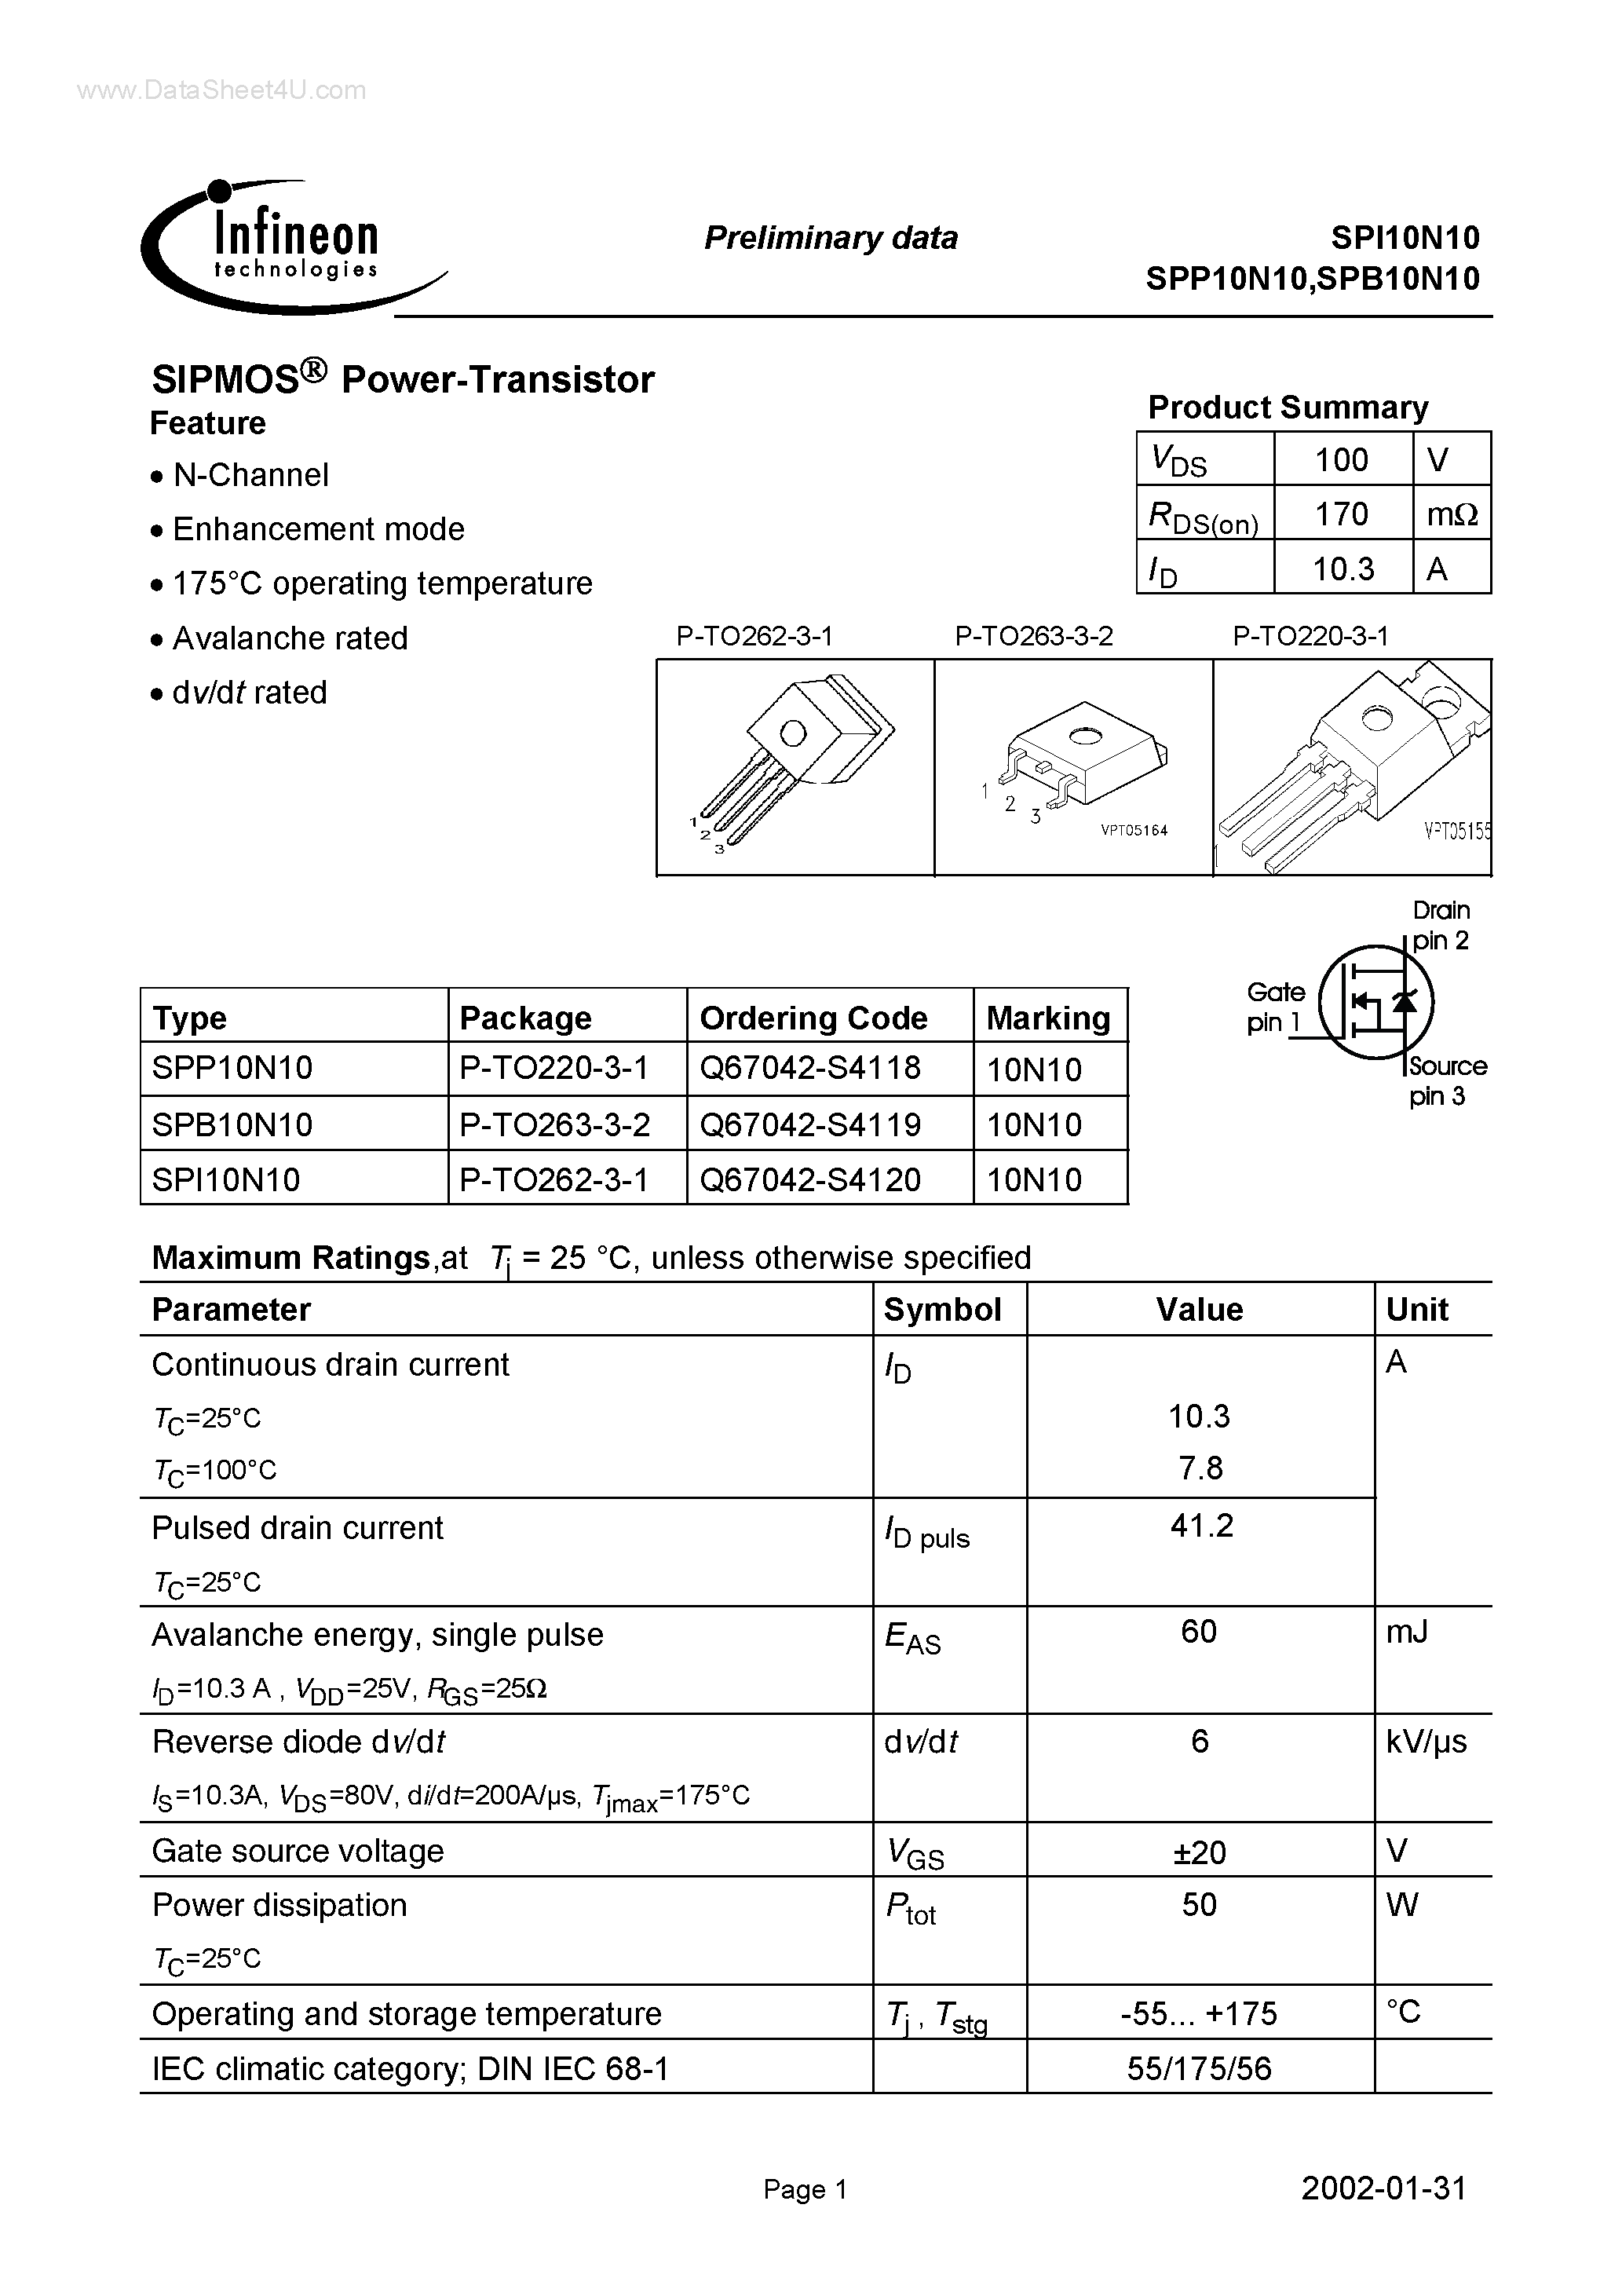 Даташит SPI10N10 - SIPMOS Power-Transistor страница 1